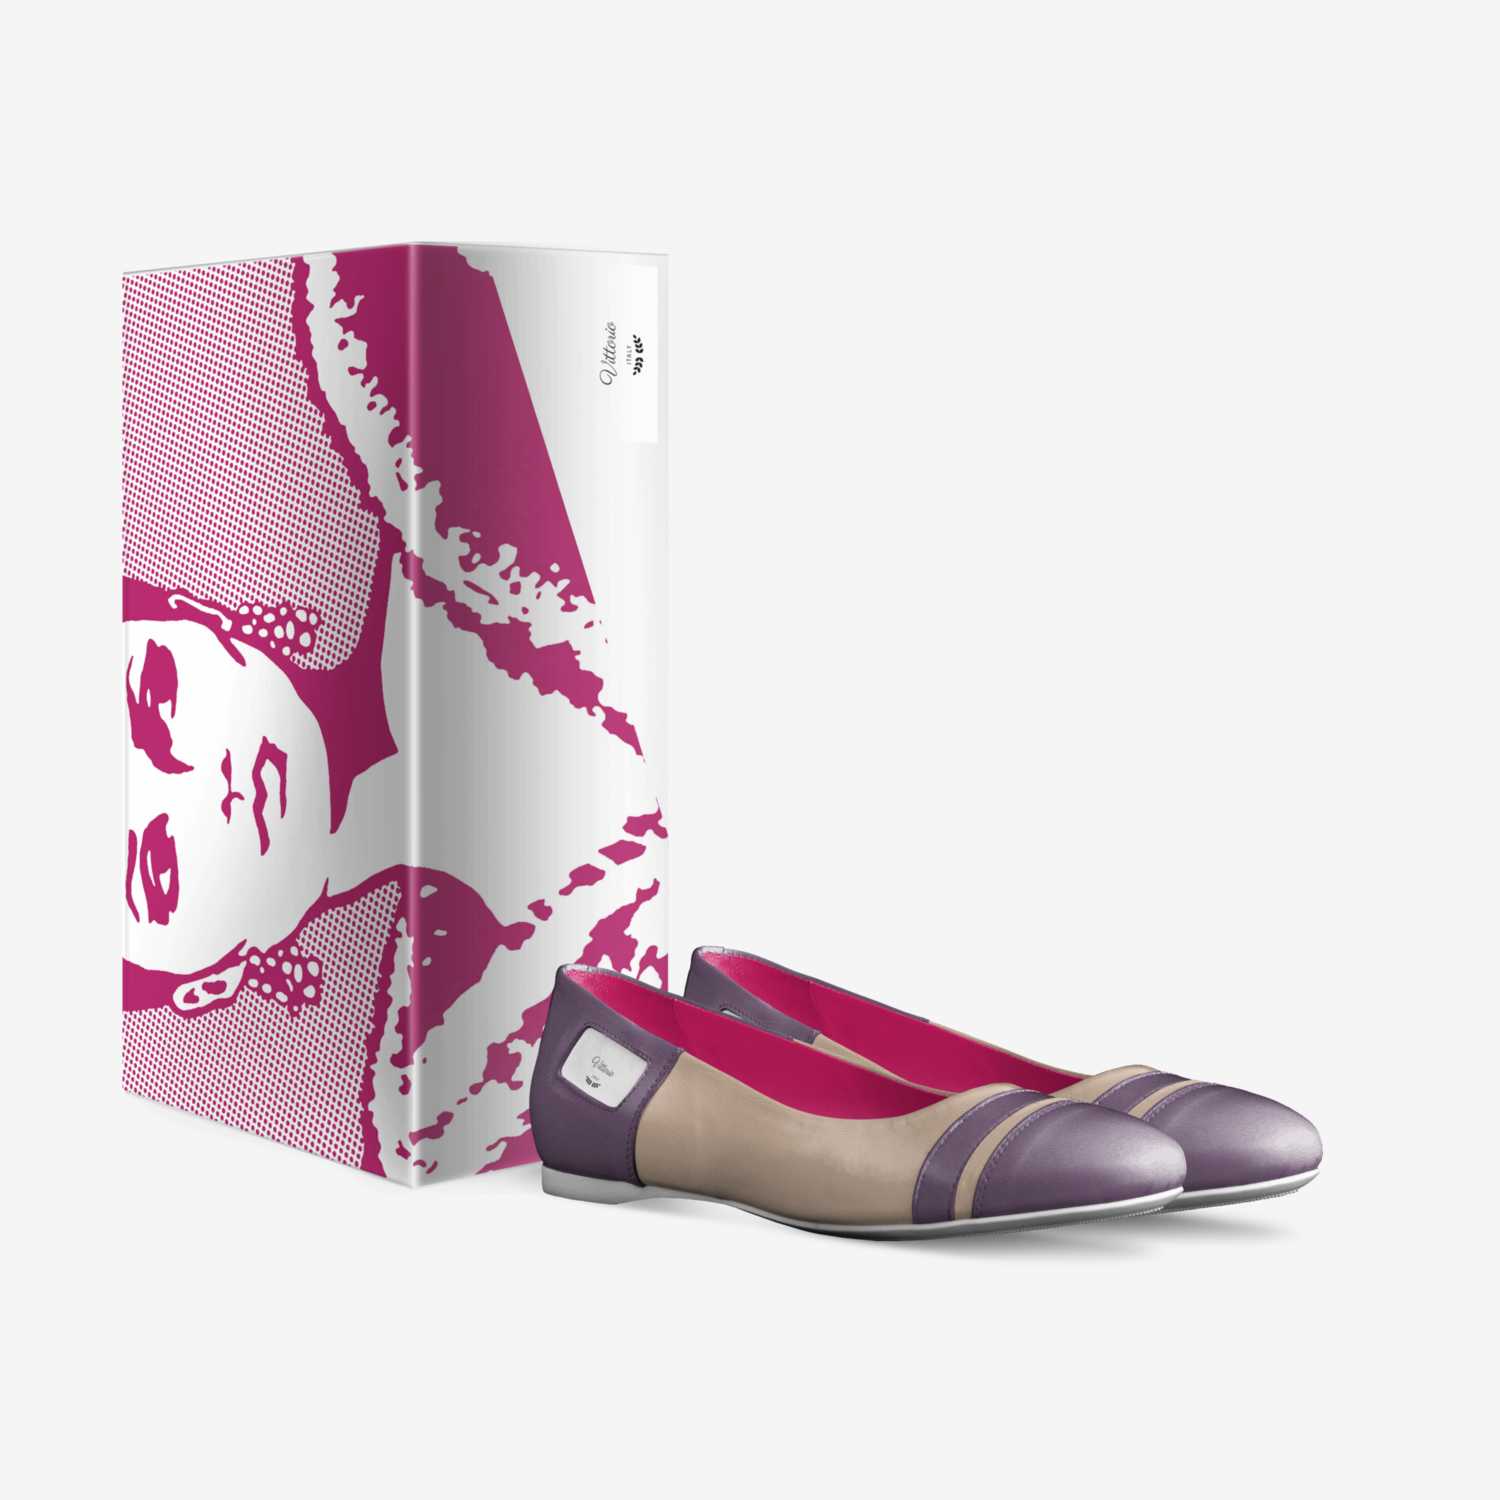 Vittorio custom made in Italy shoes by Vittorio De Oro | Box view